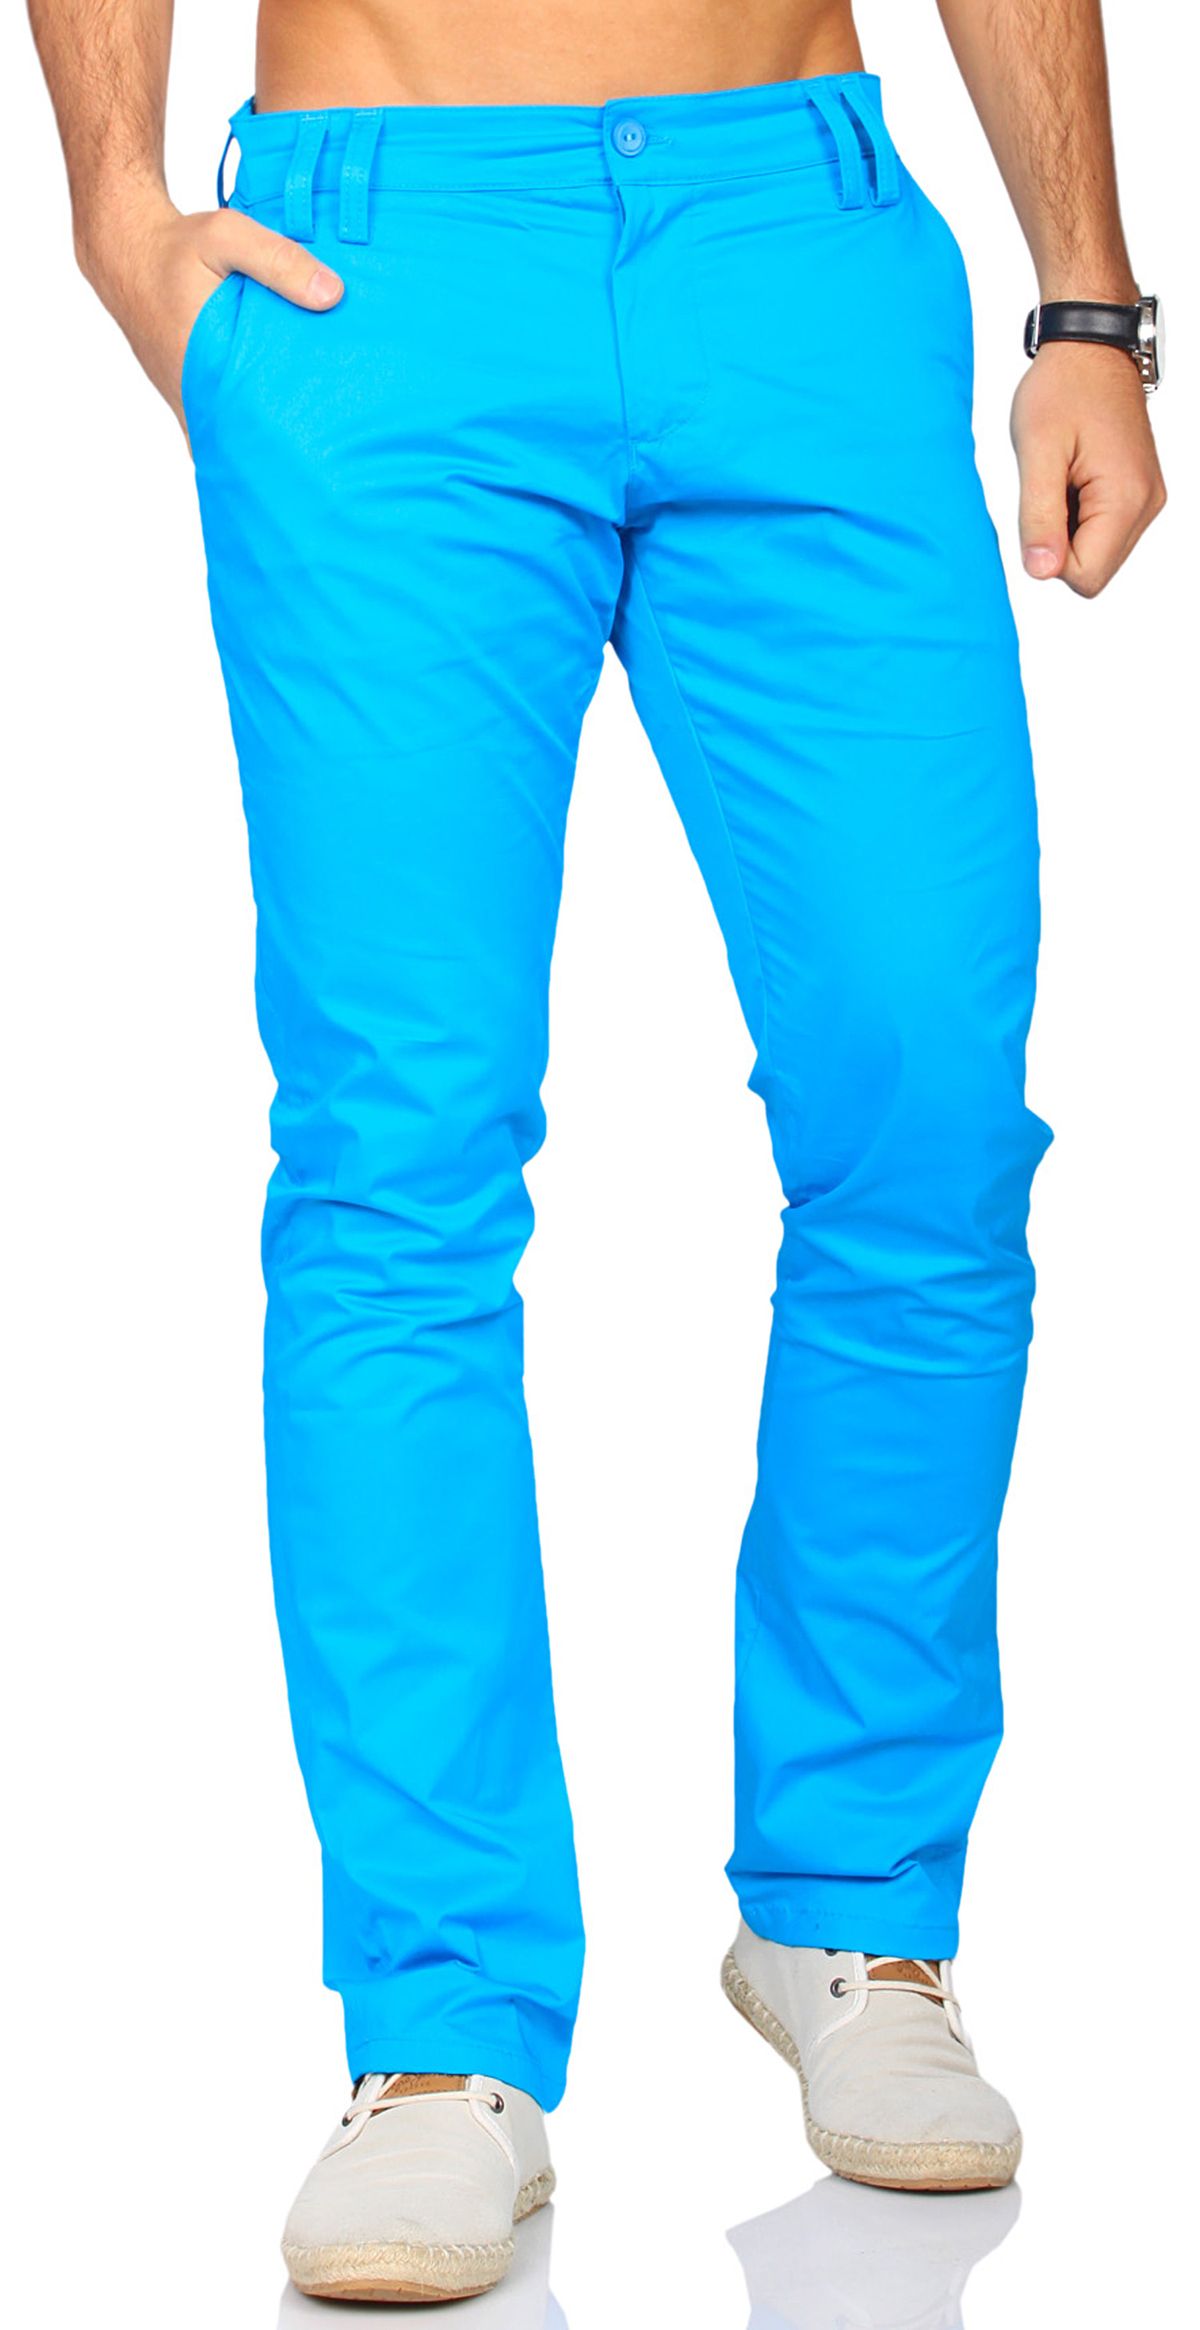 Rerock Herren Chino Hose Pants | Slim stretch eBay blocking Fit Sommerhose color style